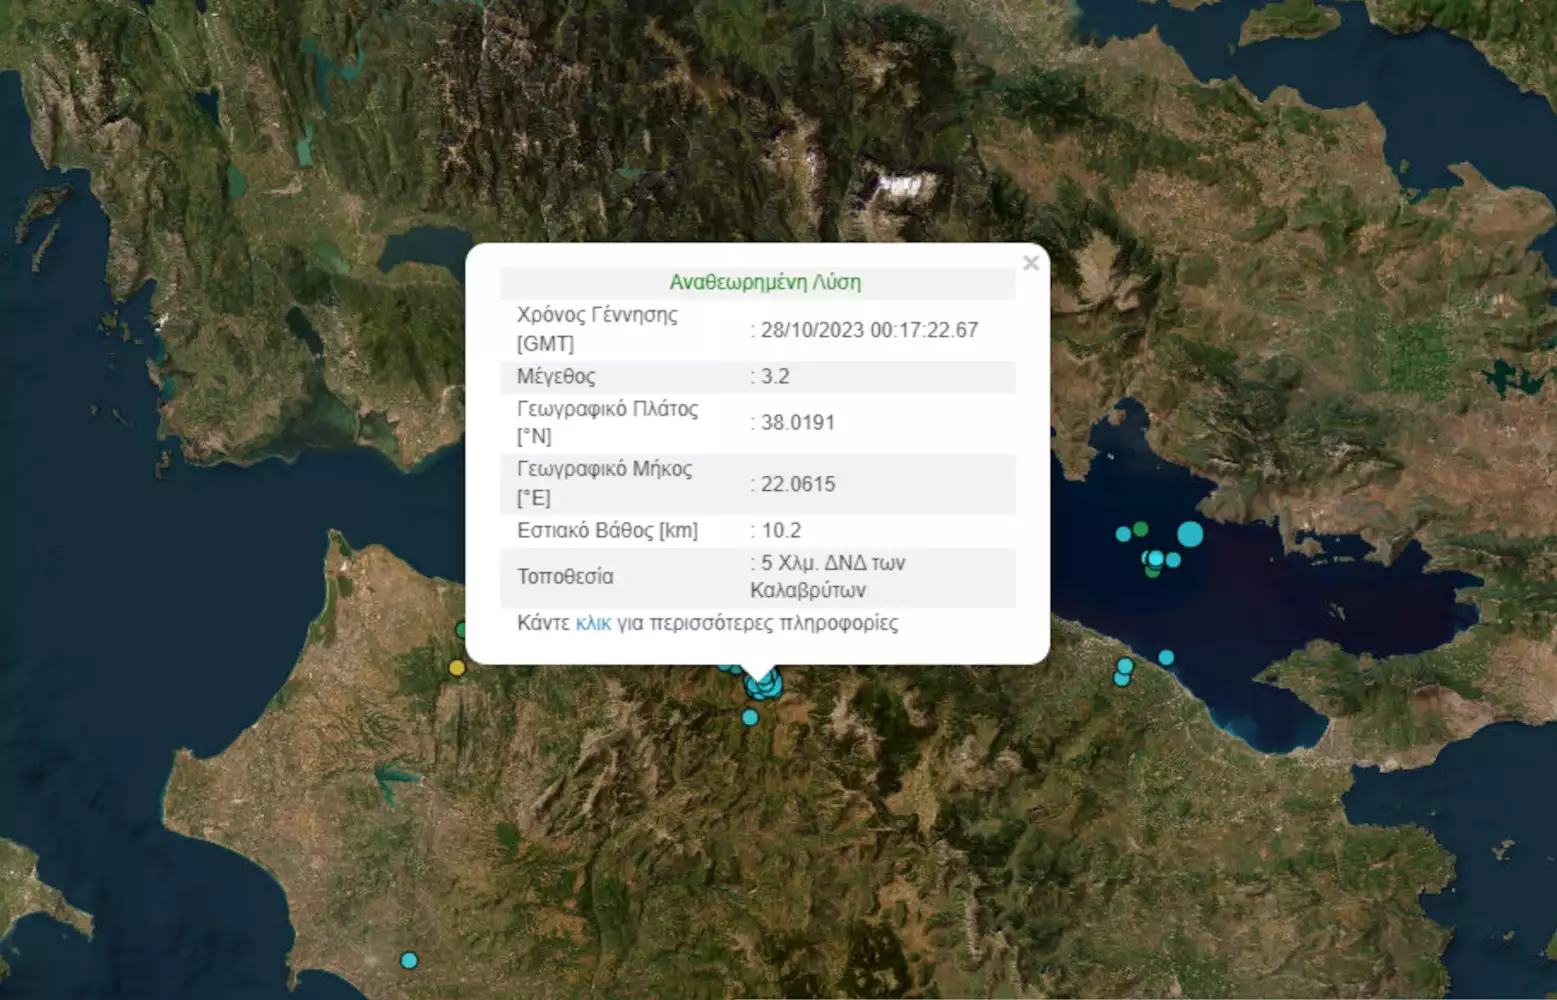 seismos kalavryta 28 10 2023 - Σεισμός τα ξημερώματα στα Καλάβρυτα!